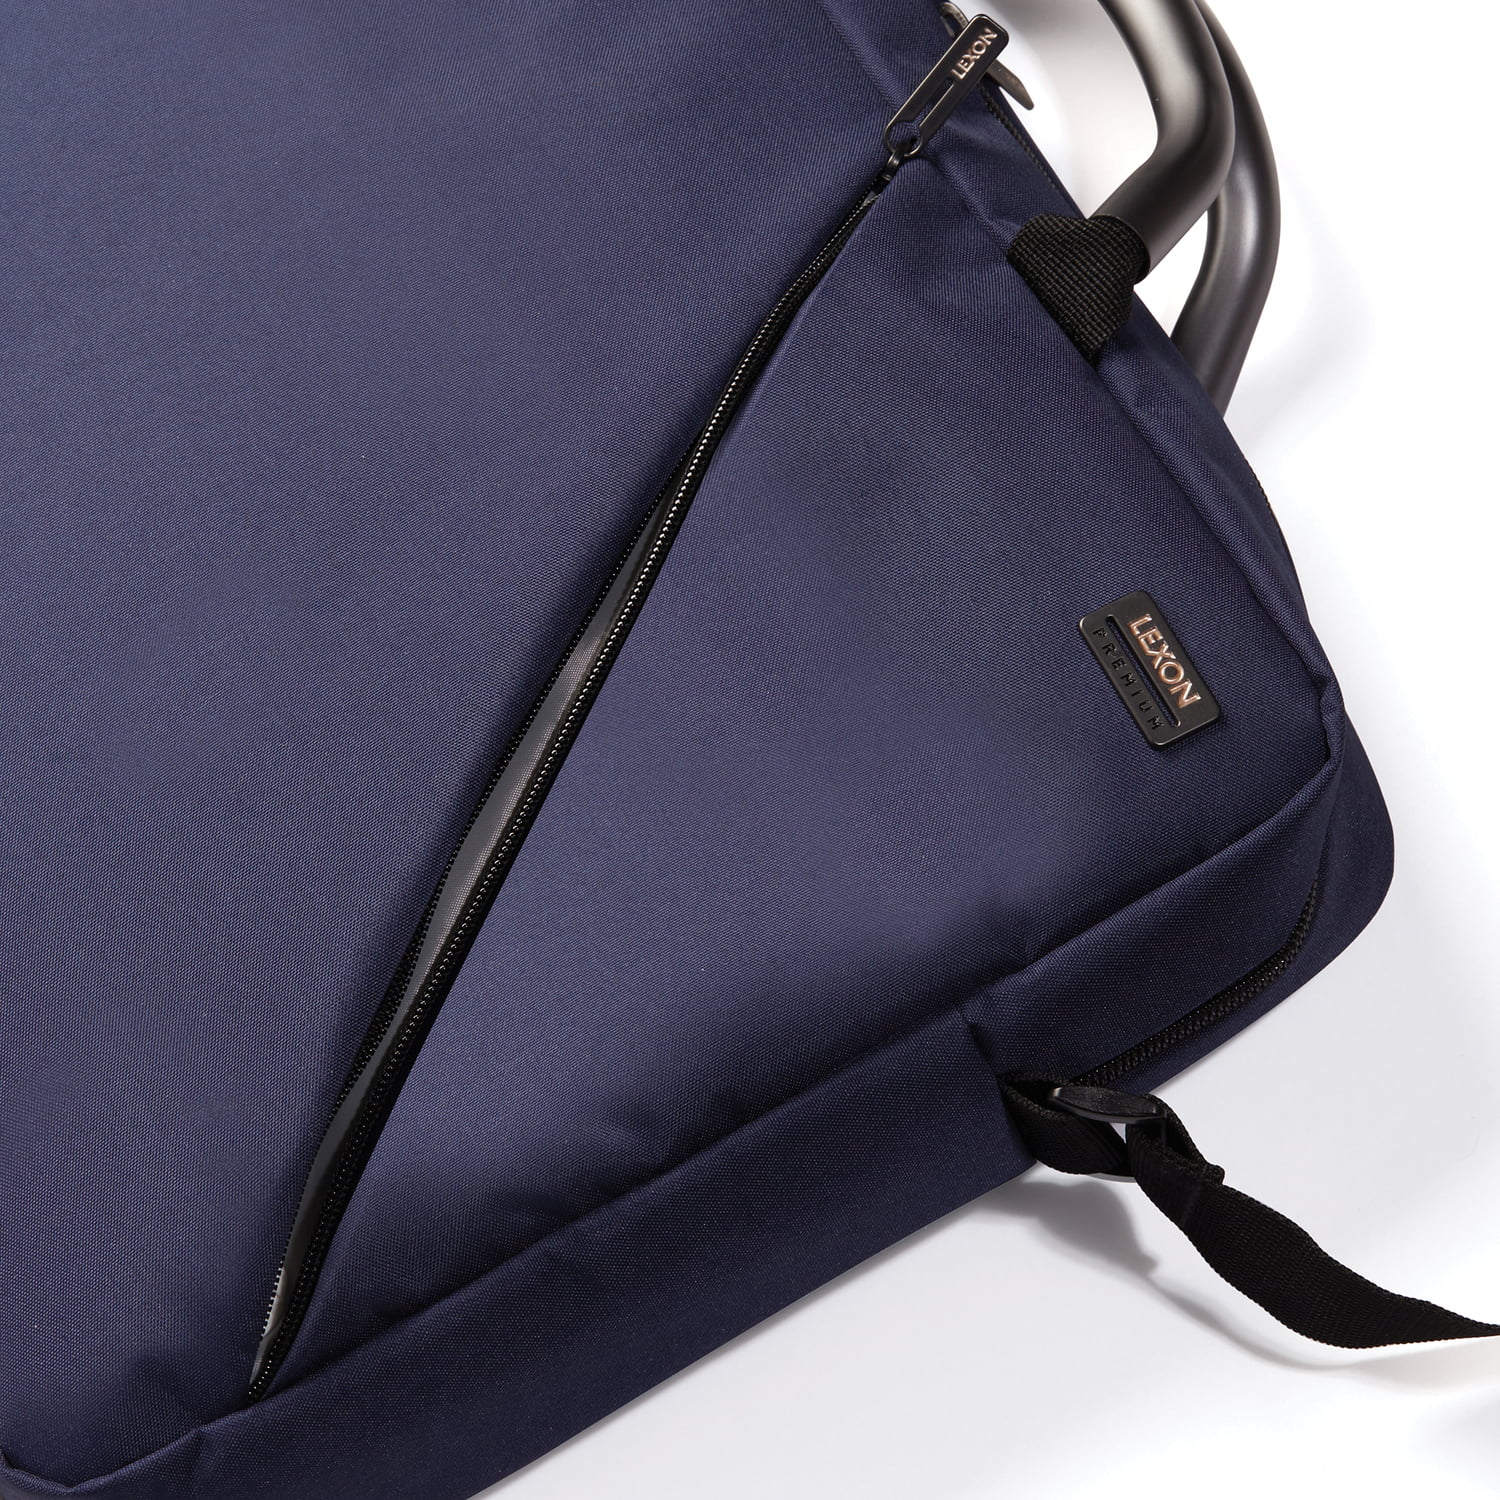 Peanut Duffle Bag large foldable - Lexon LN1513A | FormAdore